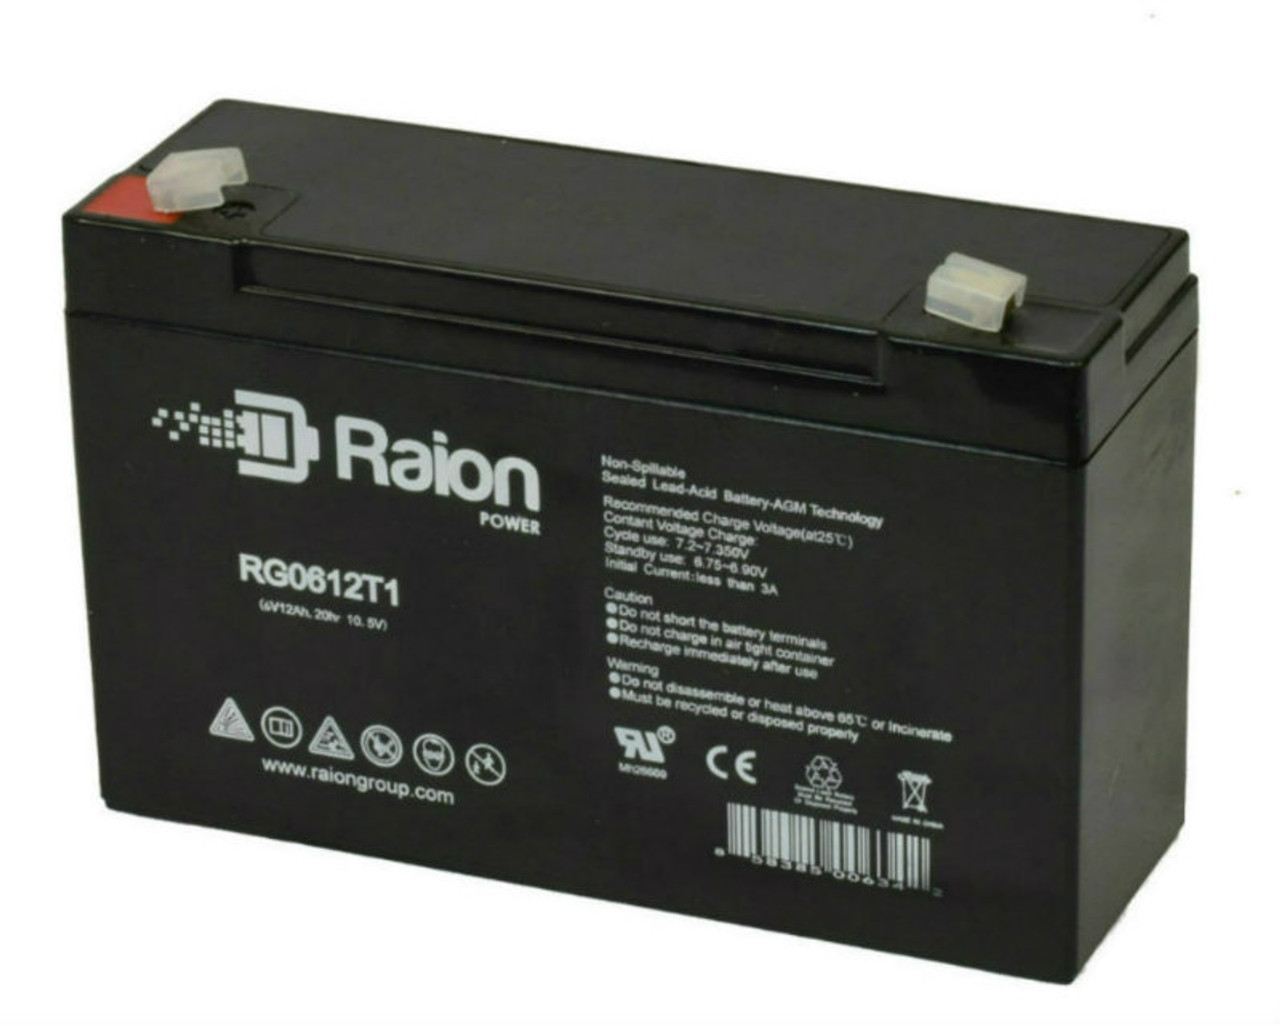 Raion Power RG06120T1 Replacement 6V 12Ah Emergency Light Battery for Sonnenschein 2145106100